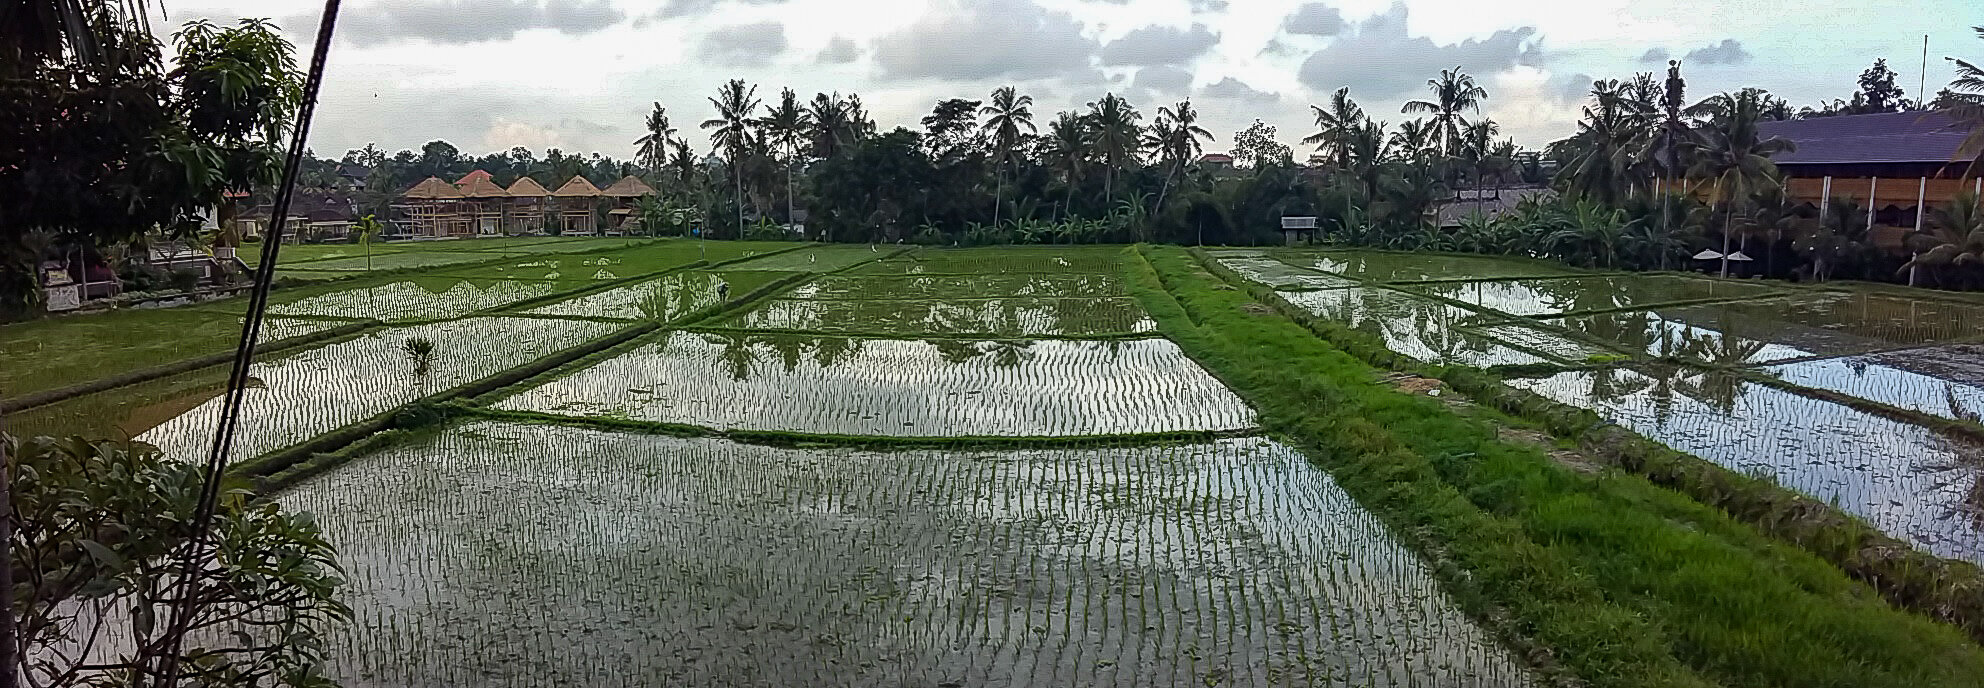  Rice paddies Bali 